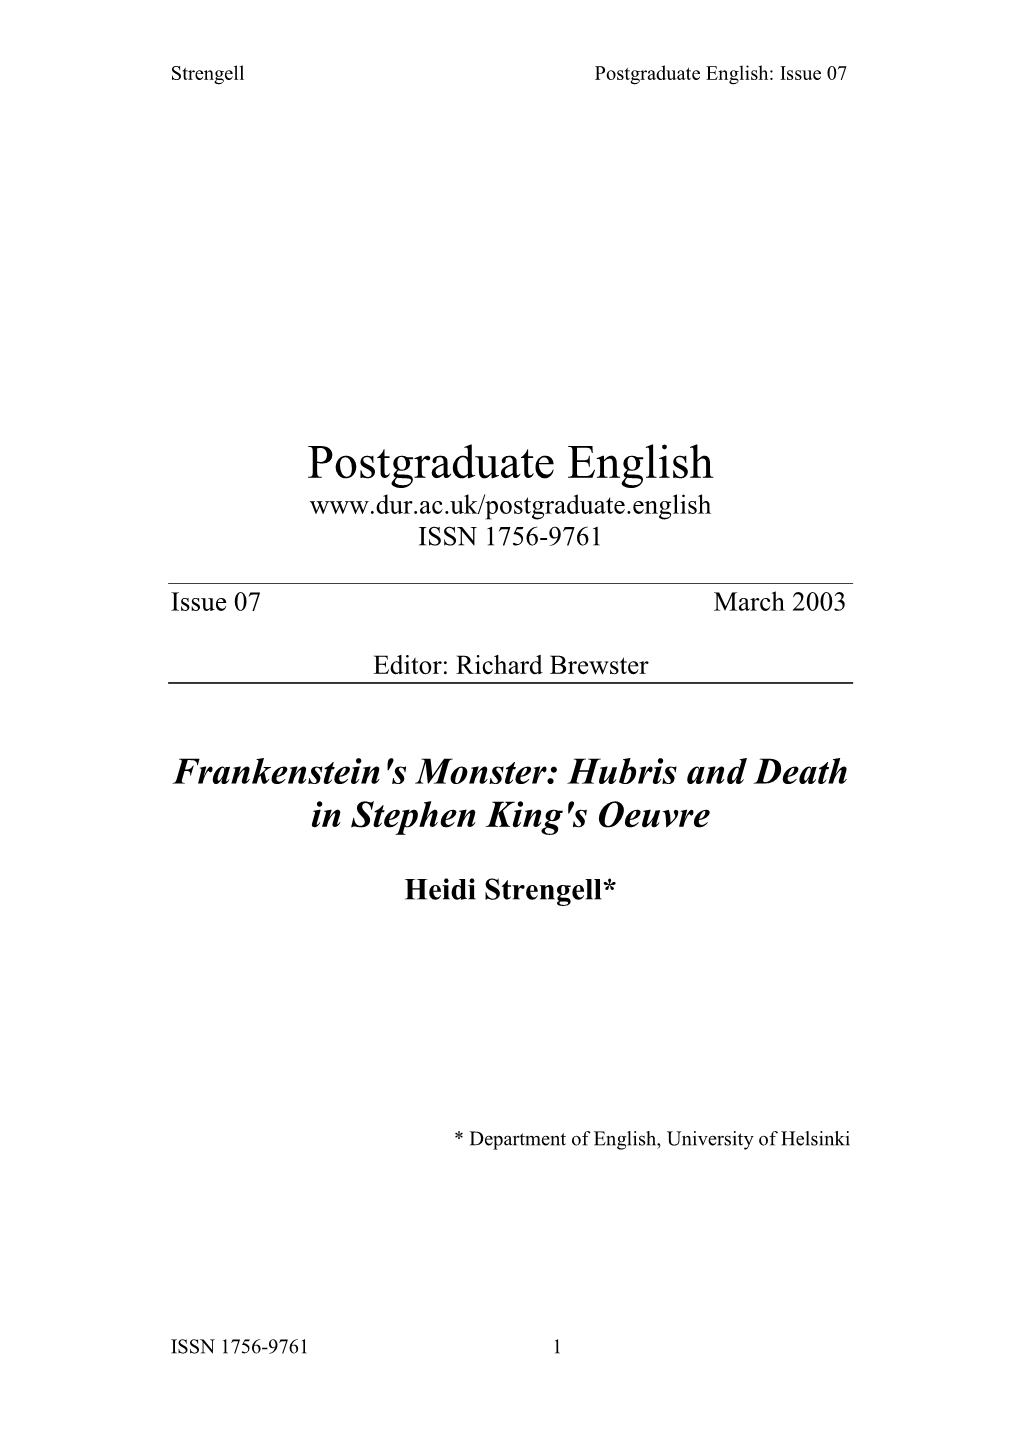 Frankenstein's Monster: Hubris and Death in Stephen King's Oeuvre